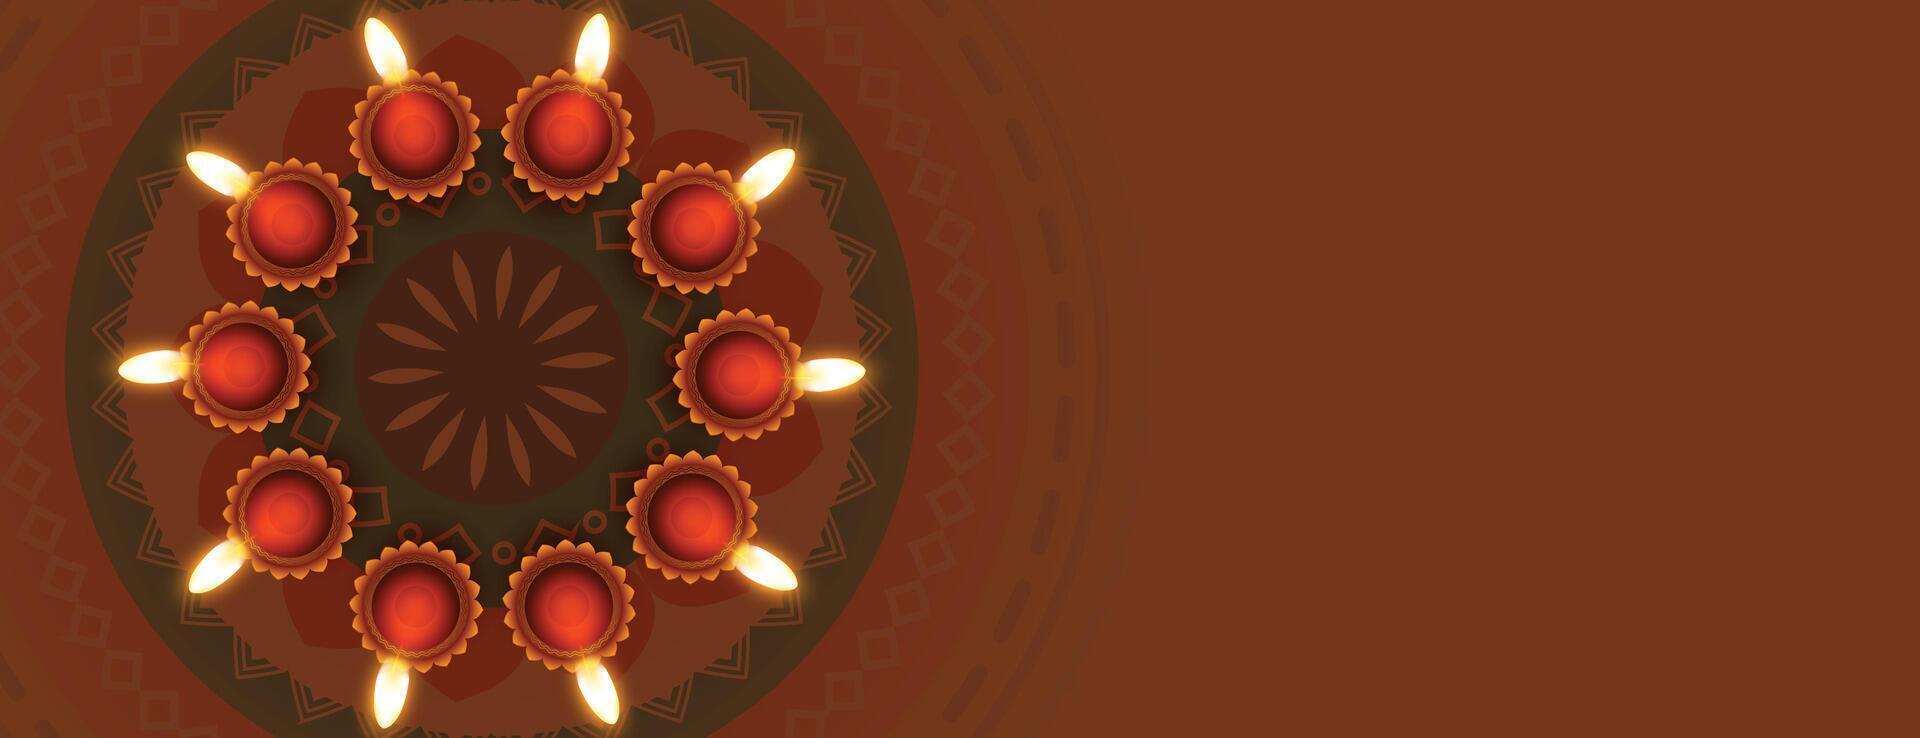 Diya und Rangoli Design zum Diwali Festival vektor